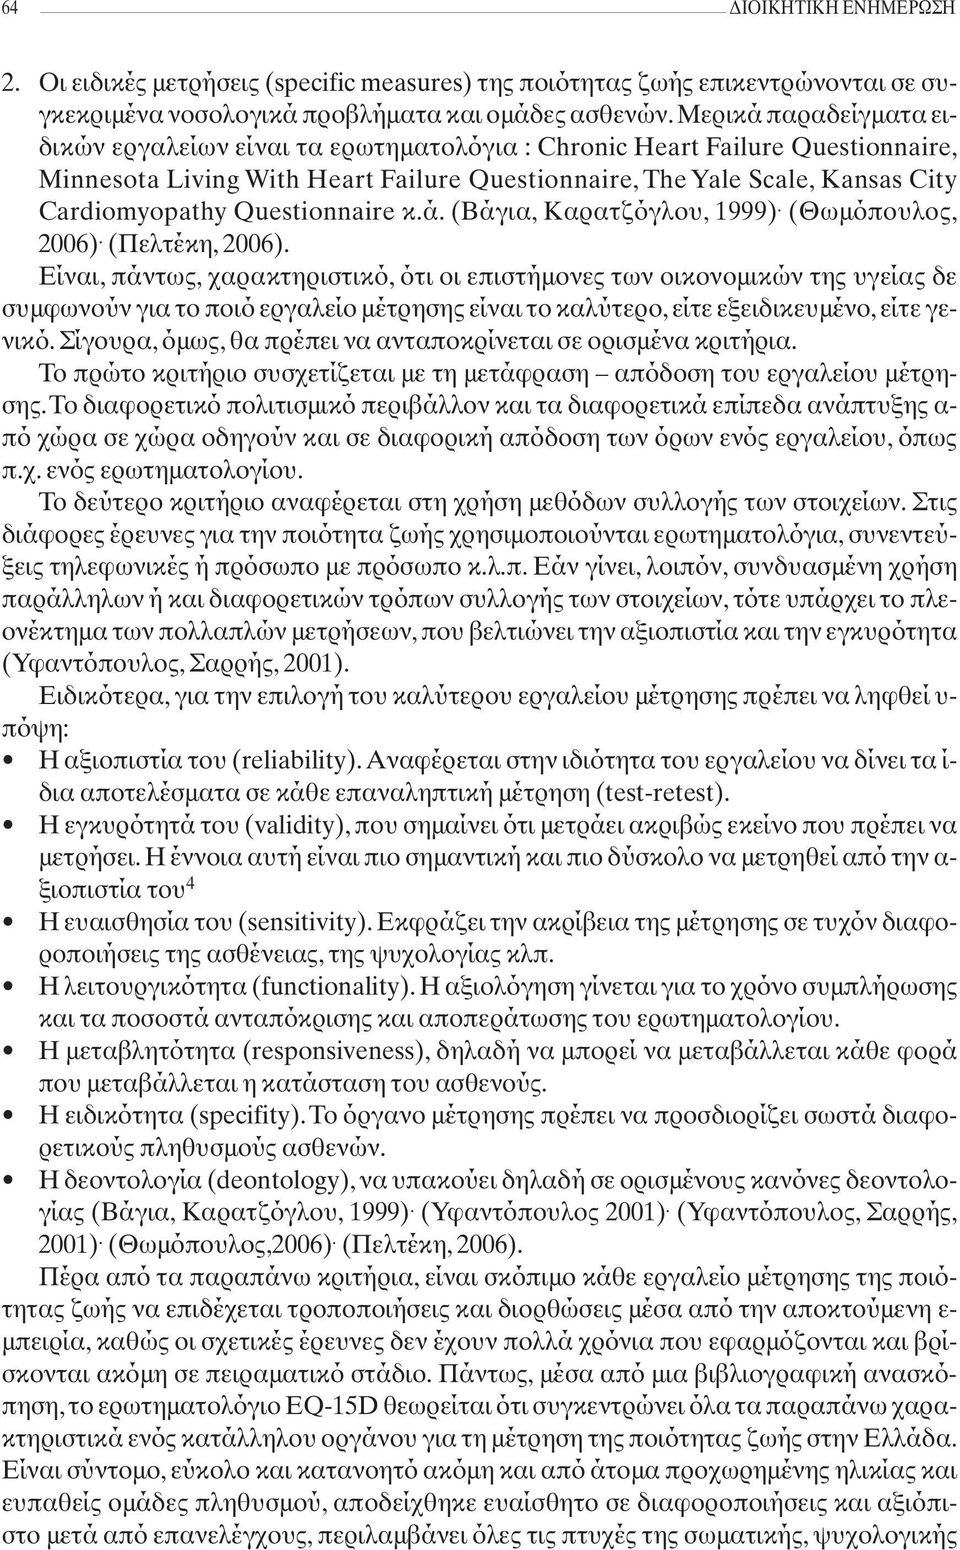 Questionnaire κ.ά. (Βάγια, Καρατζόγλου, 1999). (Θωμόπουλος, 2006). (Πελτέκη, 2006).